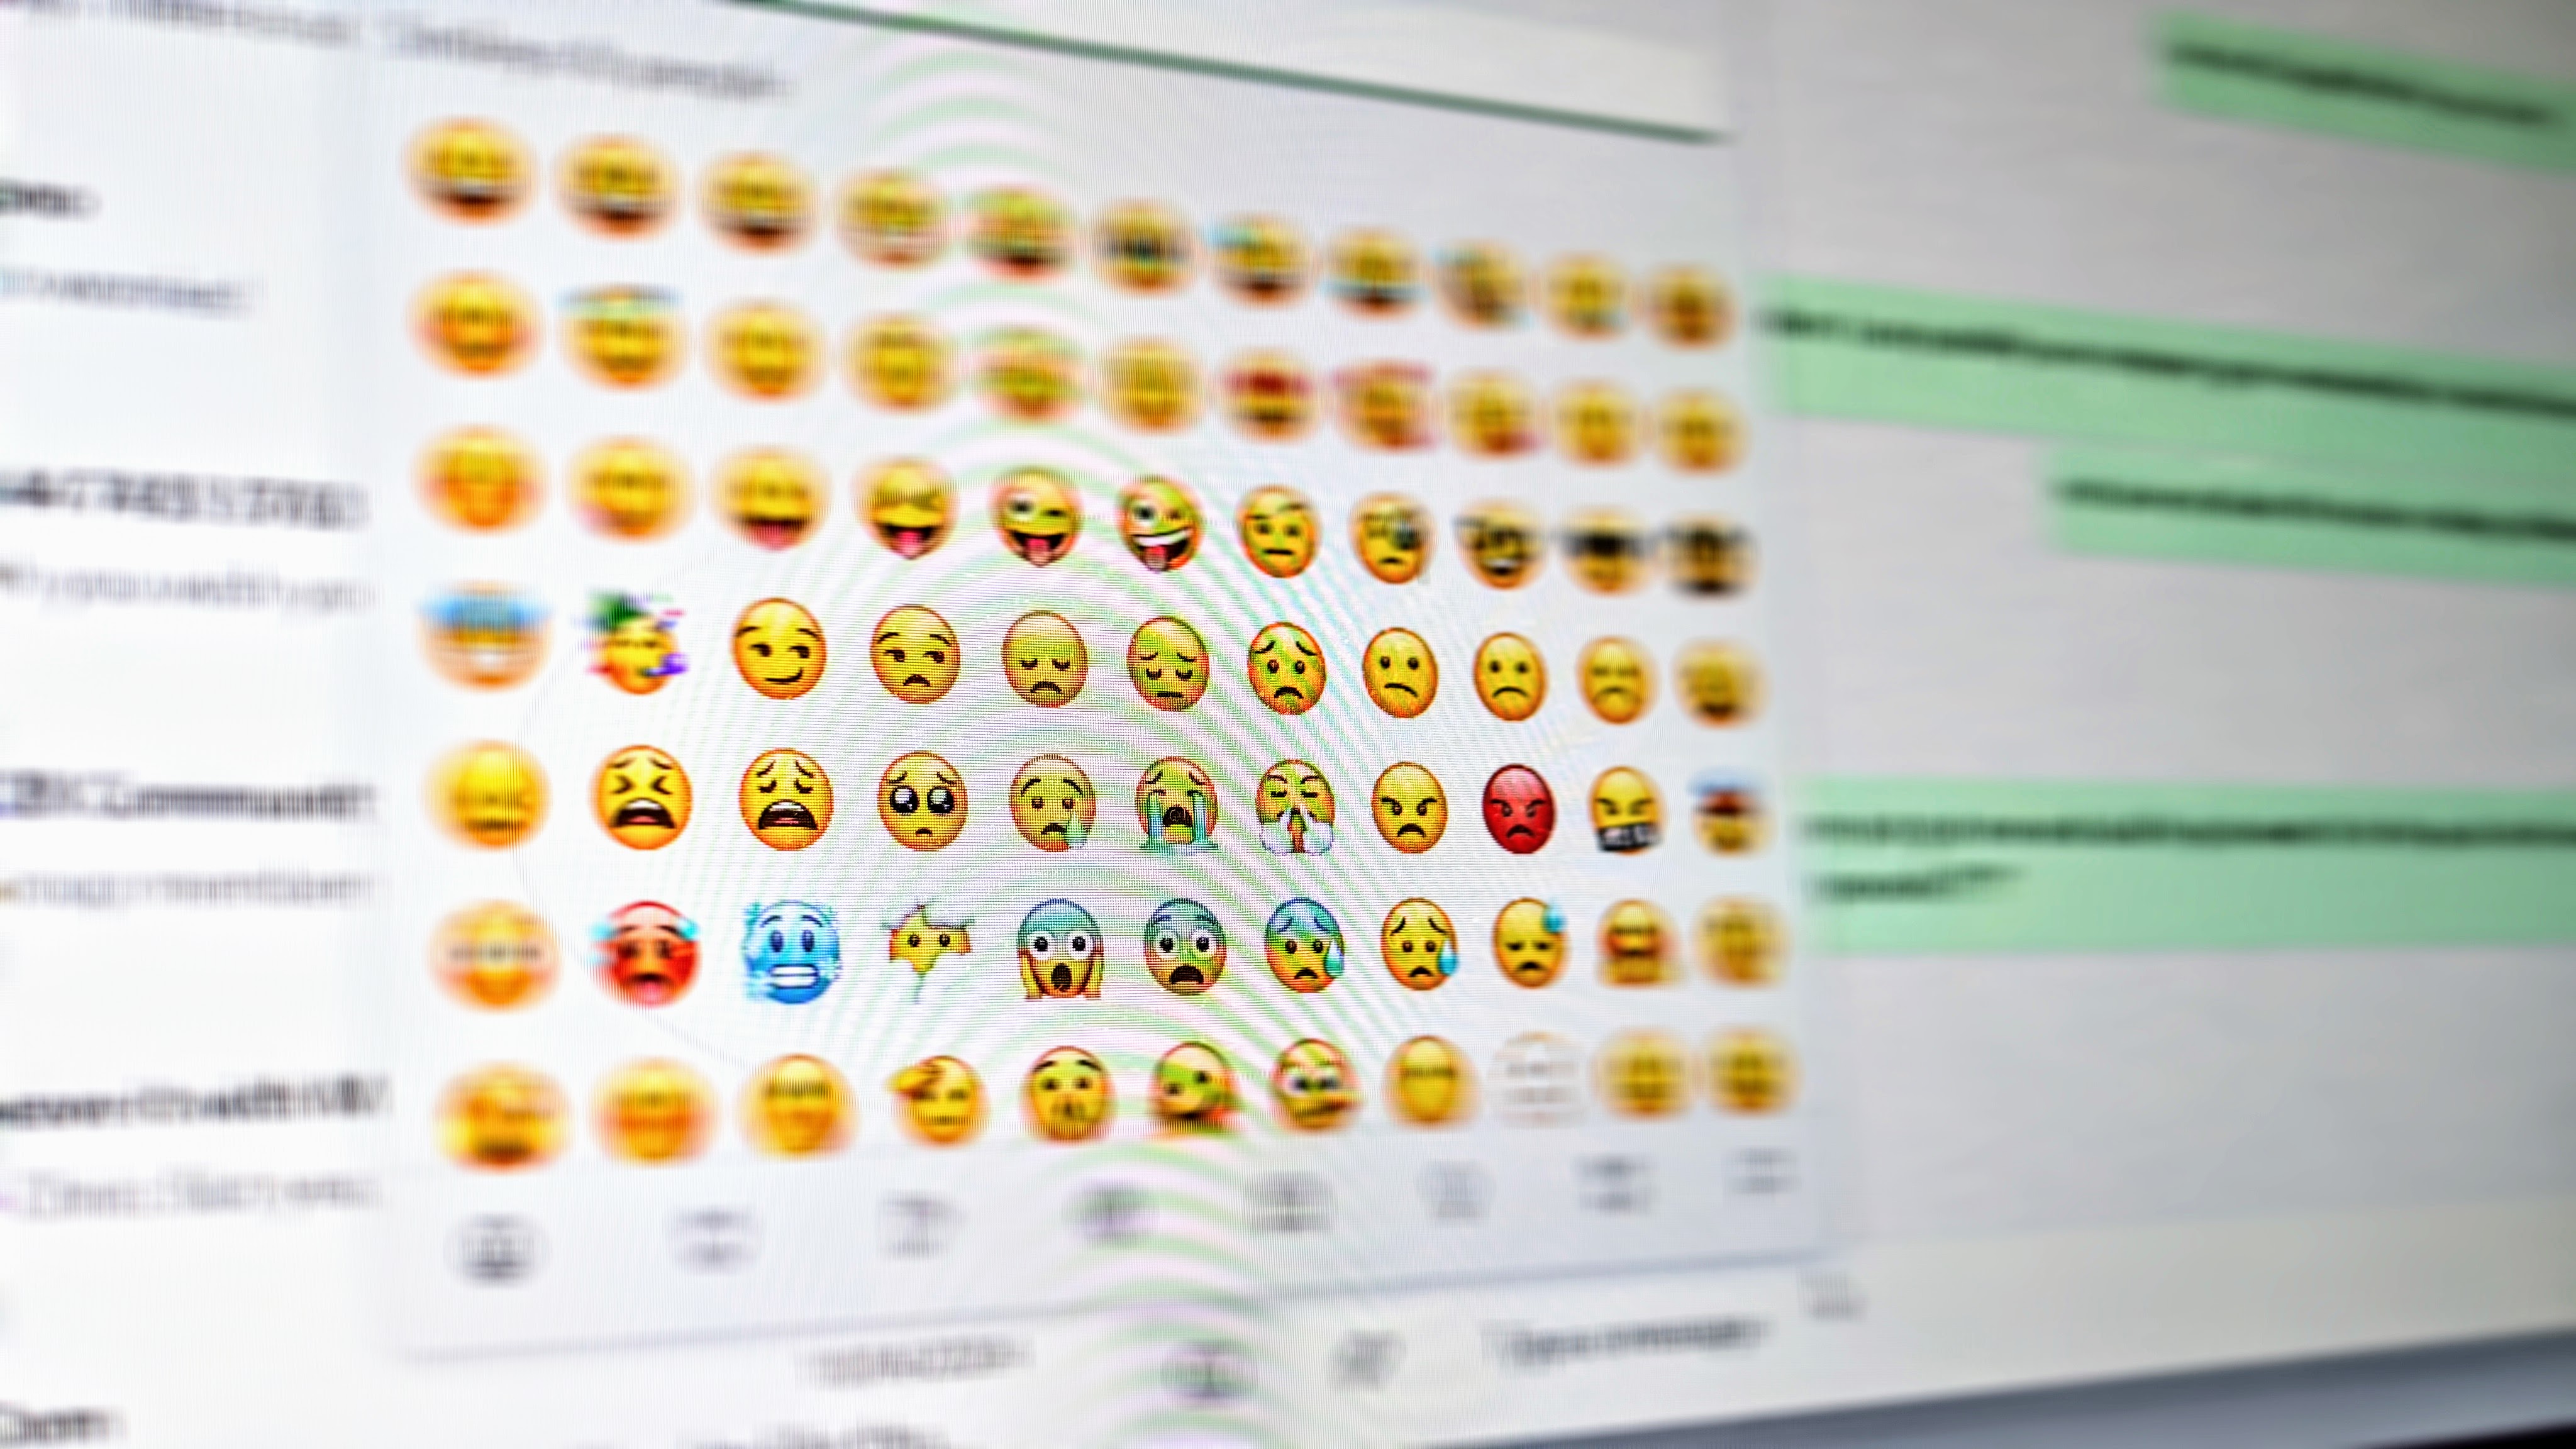 This WhatsApp emoji hack will blow your mind 